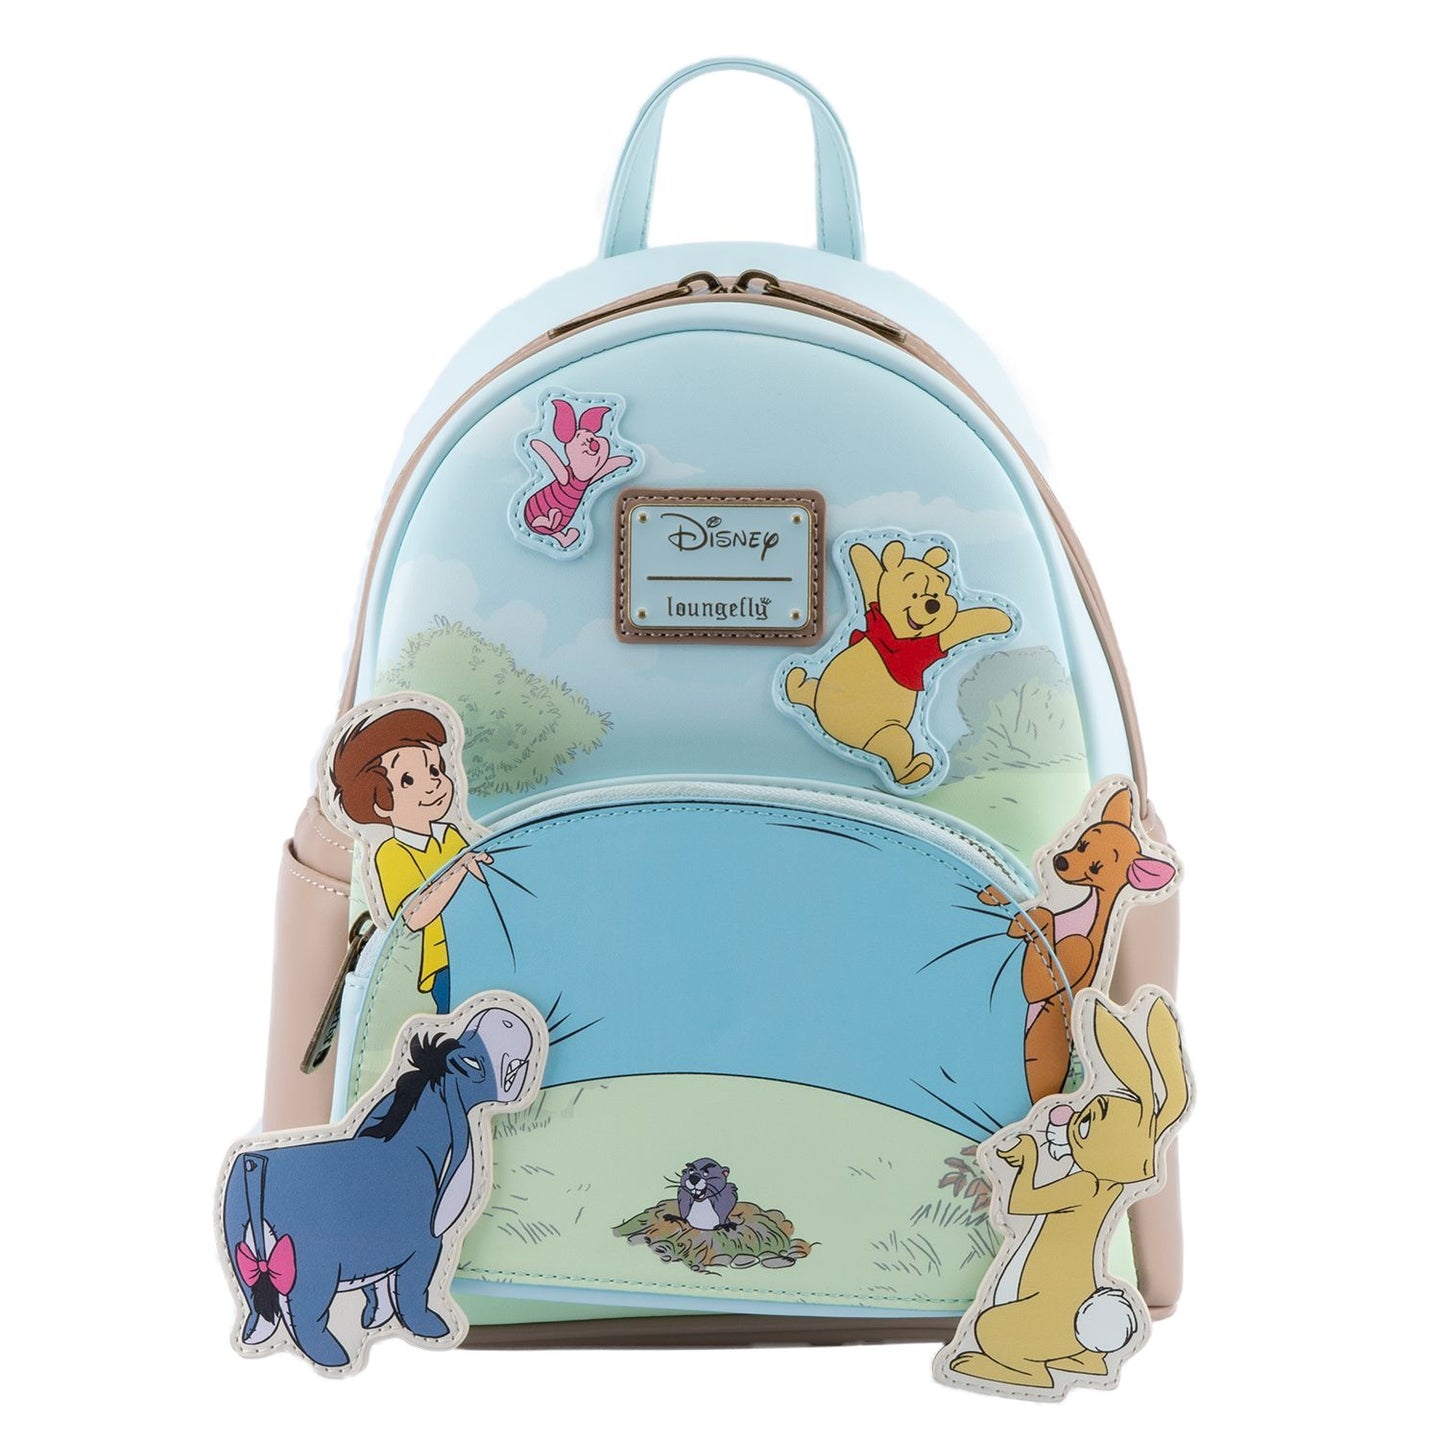 Disney Winnie the Pooh 95th Anniversary Celebration Toss Mini Backpack